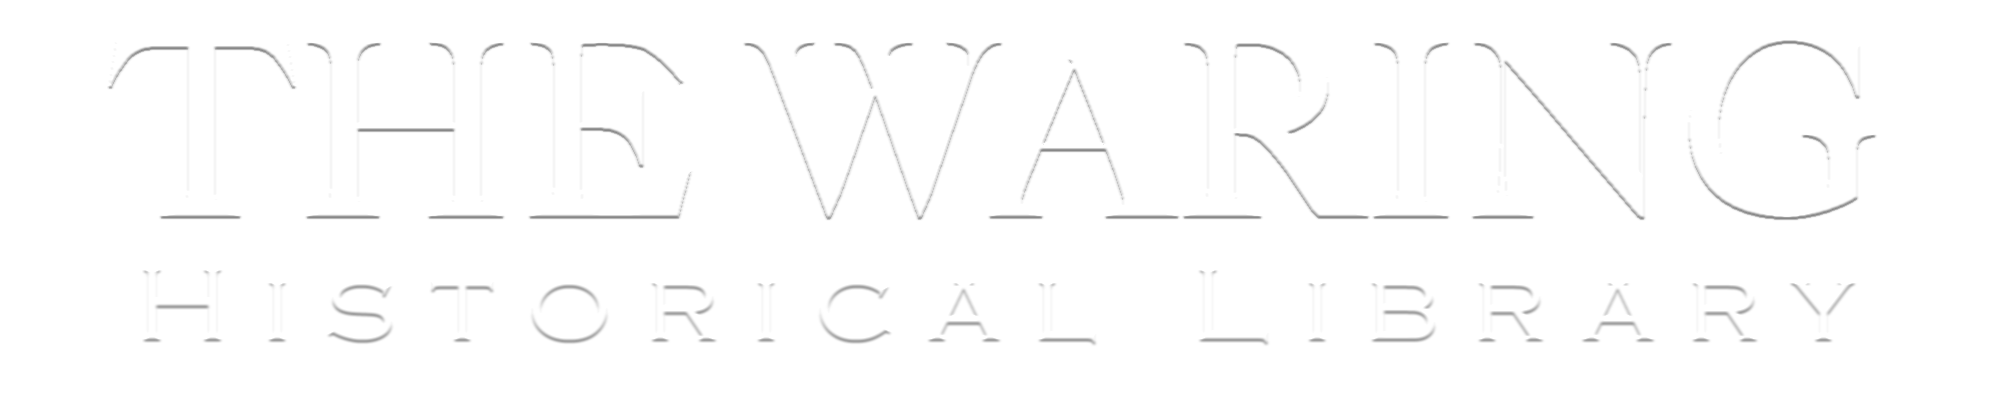 Waring Historical Library Logo text